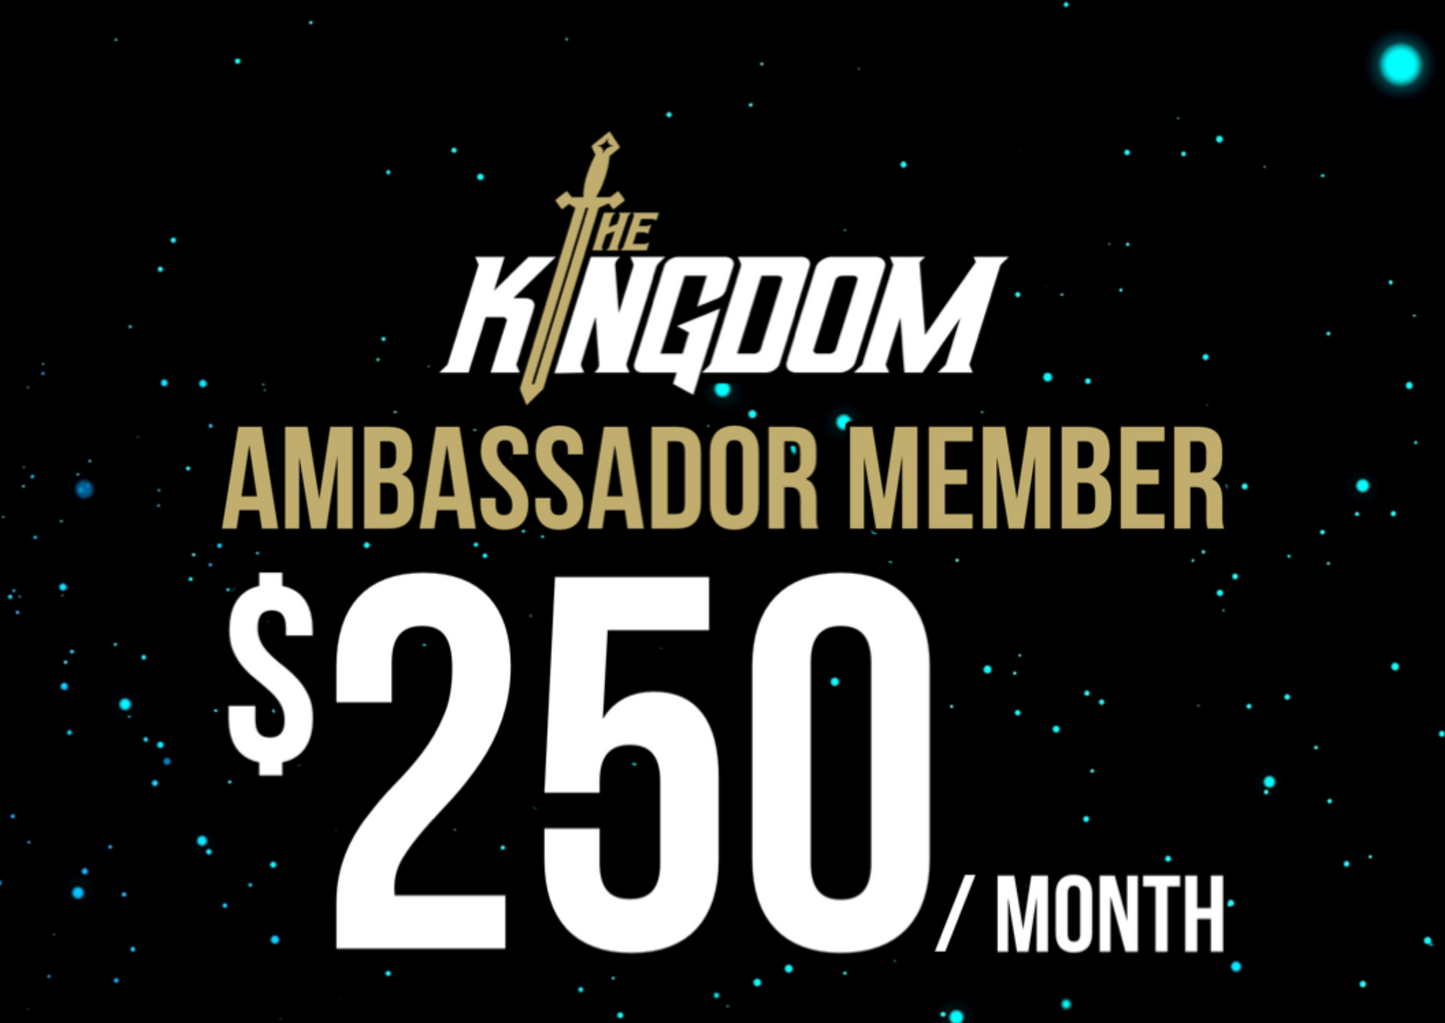 Kingdom Ambassador Member: $250 per Month